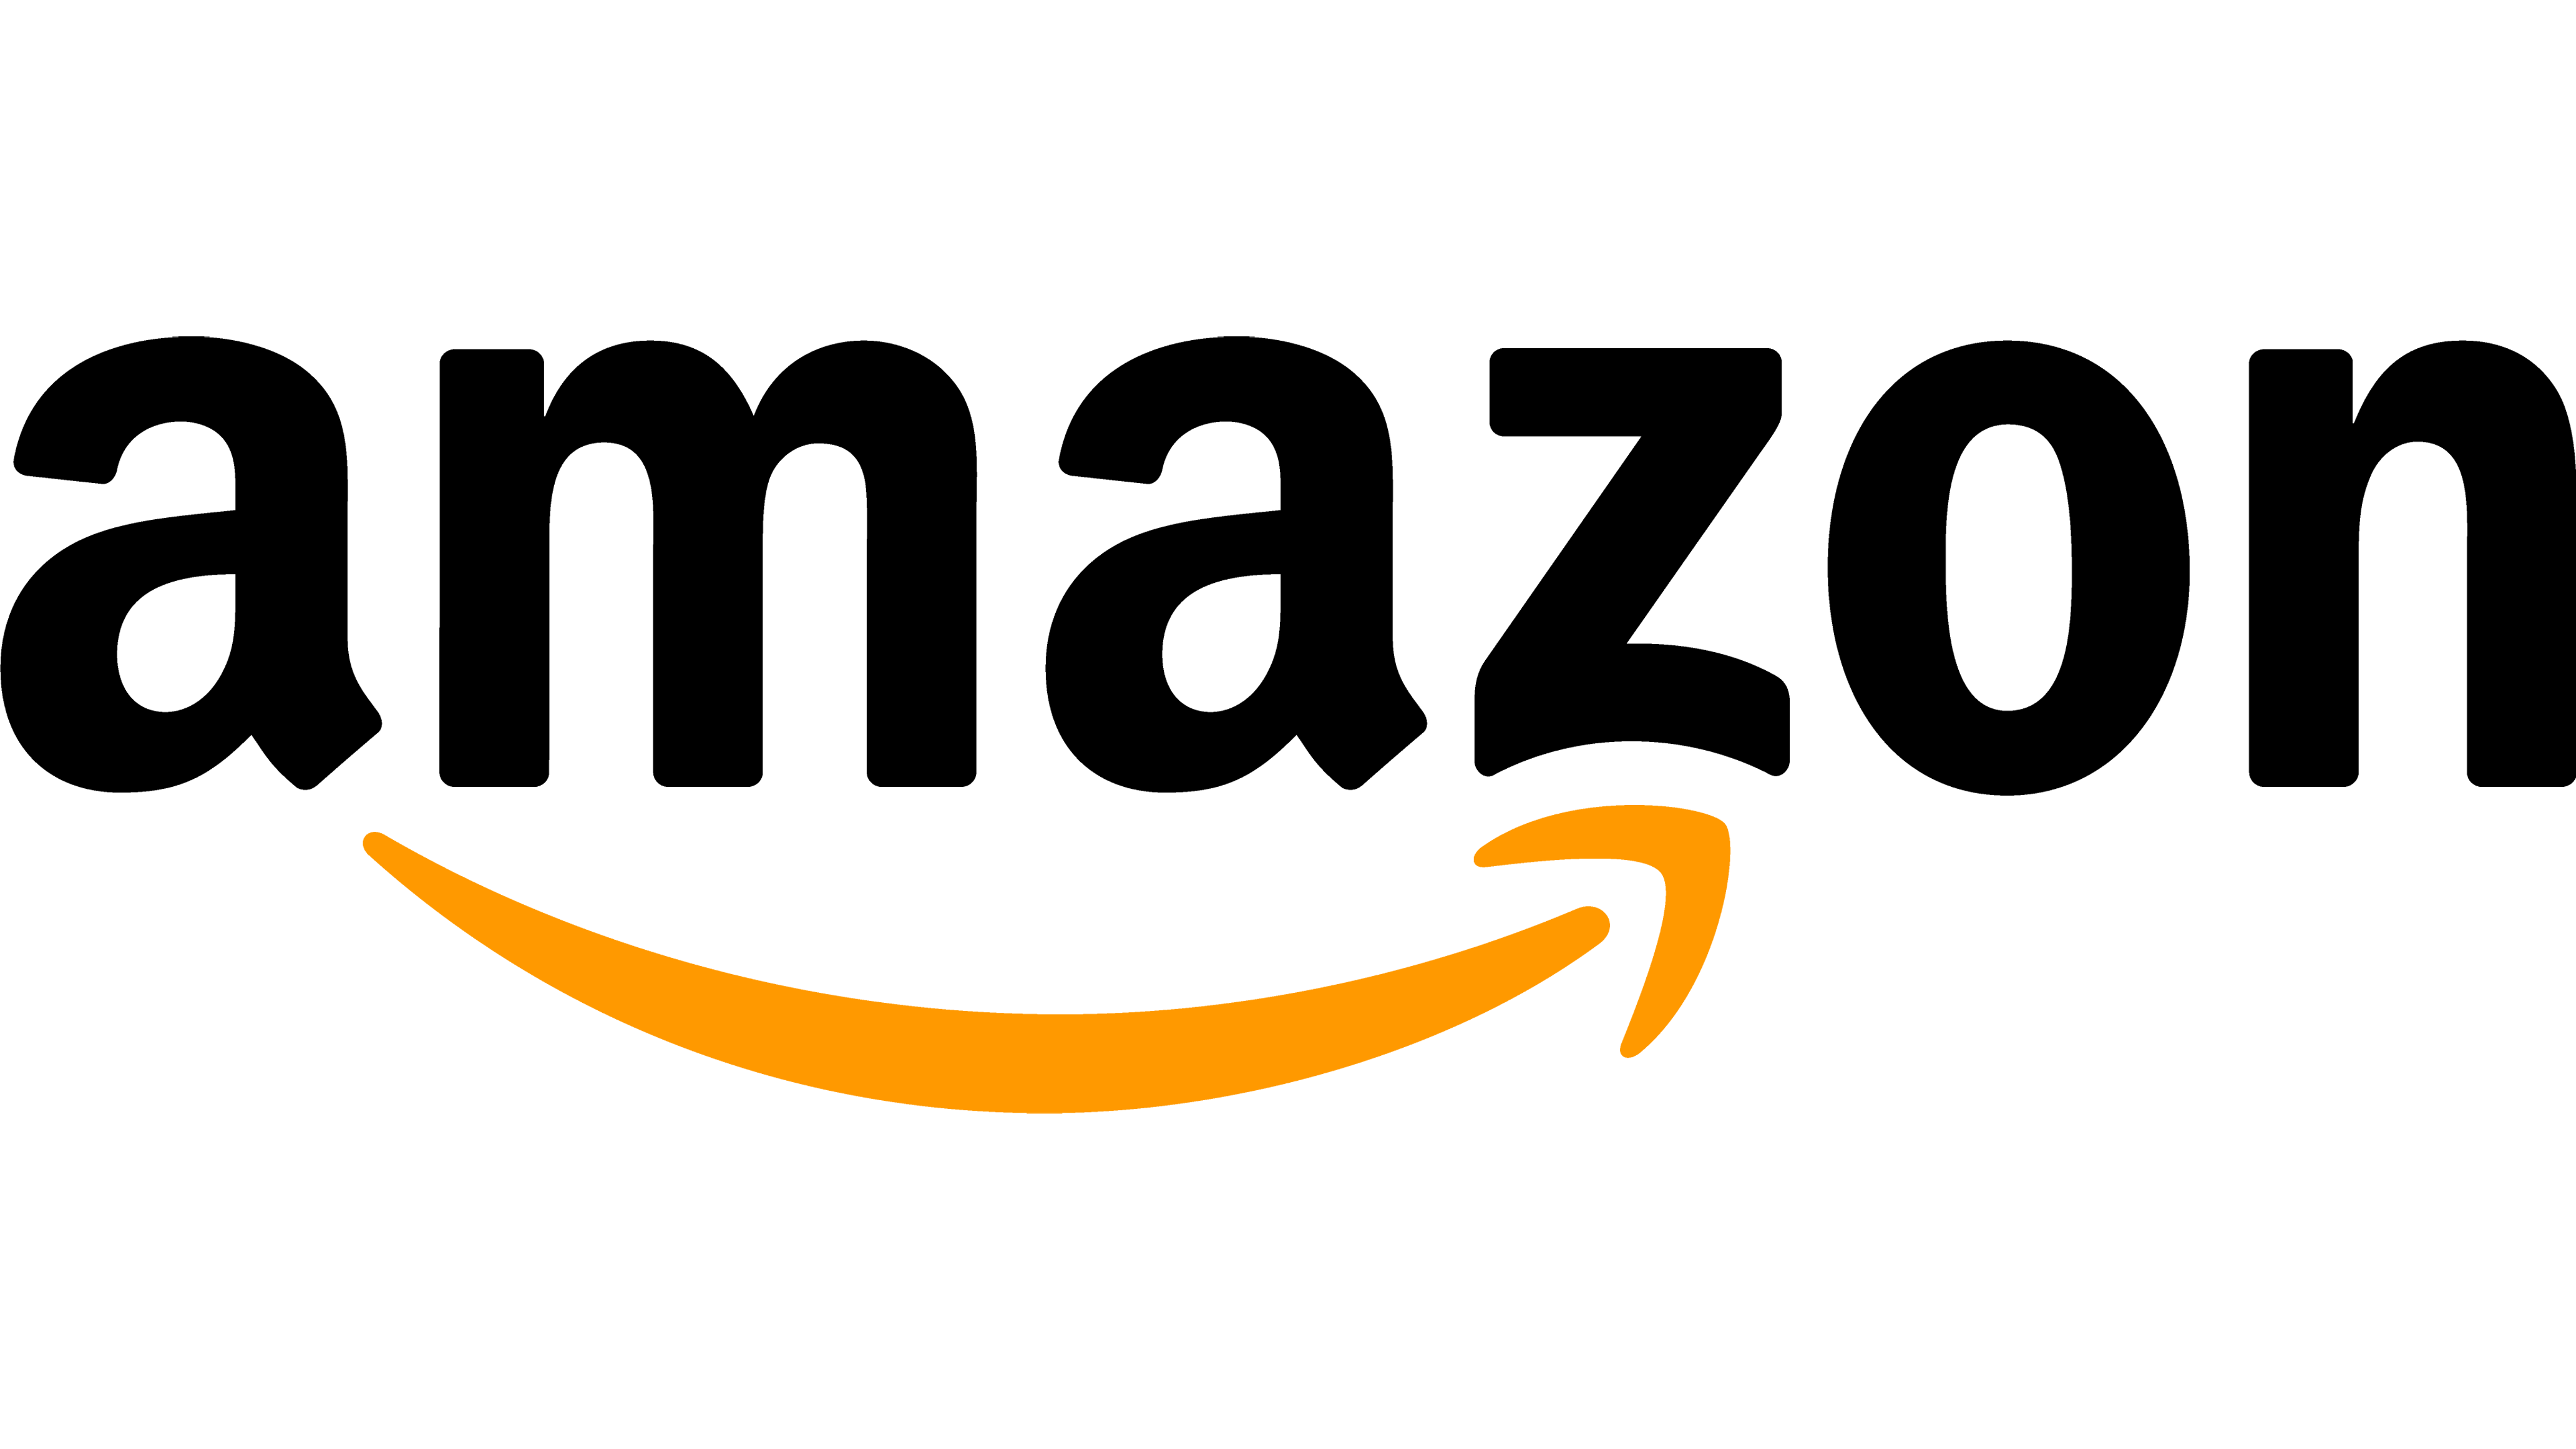 Amazon Coupons & Promo Codes